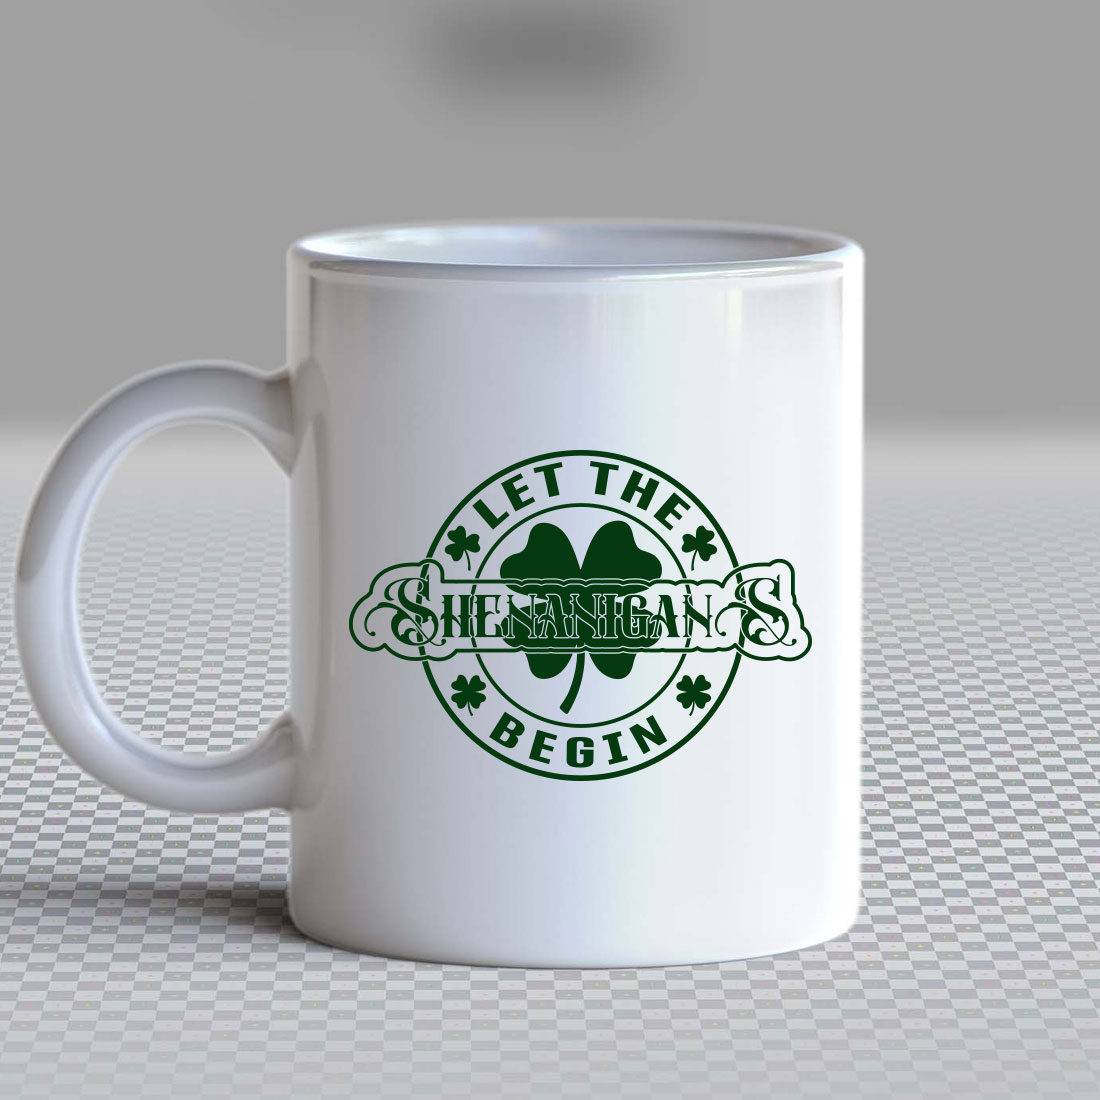 White coffee mug with a four leaf clover on it.